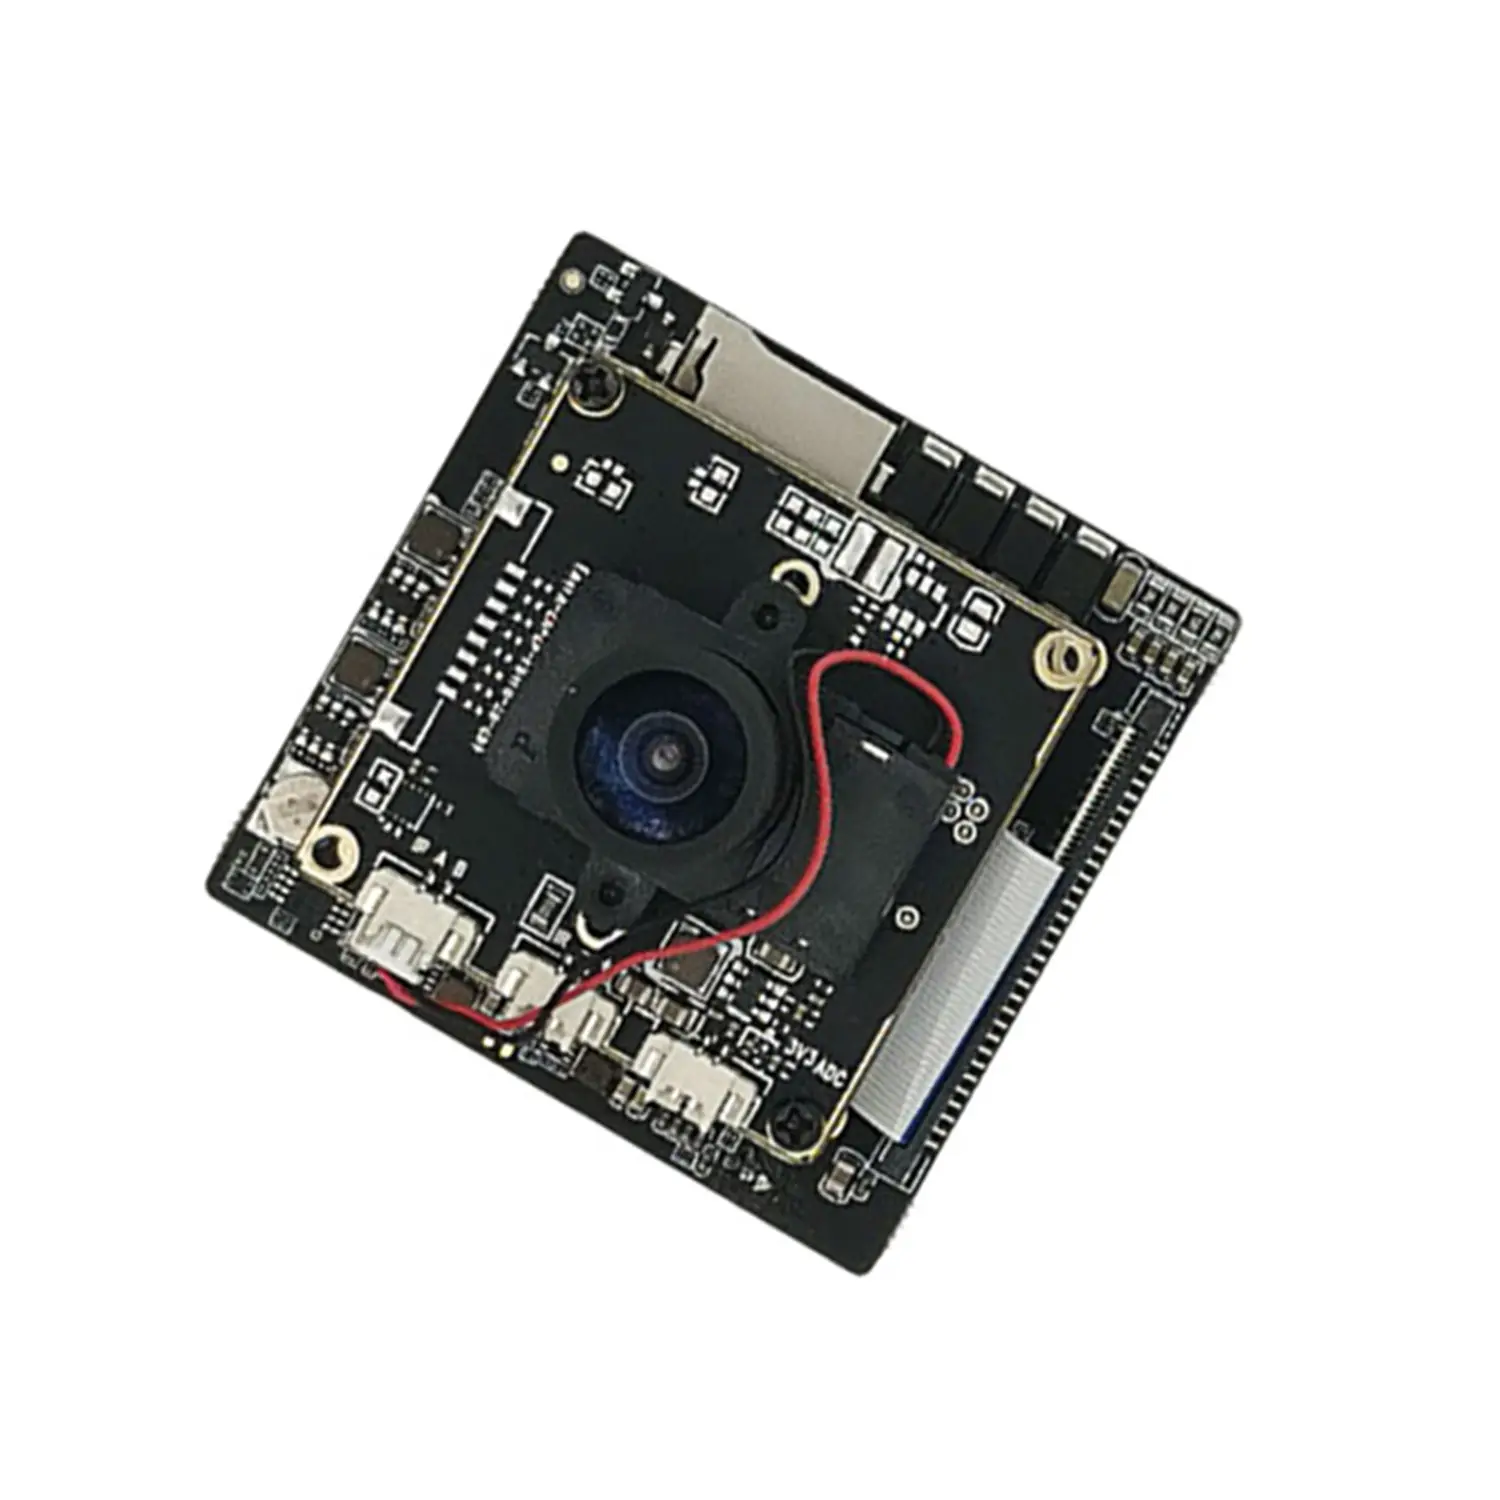 Rockchip RV1126 IP modul kamera, pelacakan otomatis WiFi 4K CCTV Digital Webcam 1080p Sensor fokus otomatis IMX415